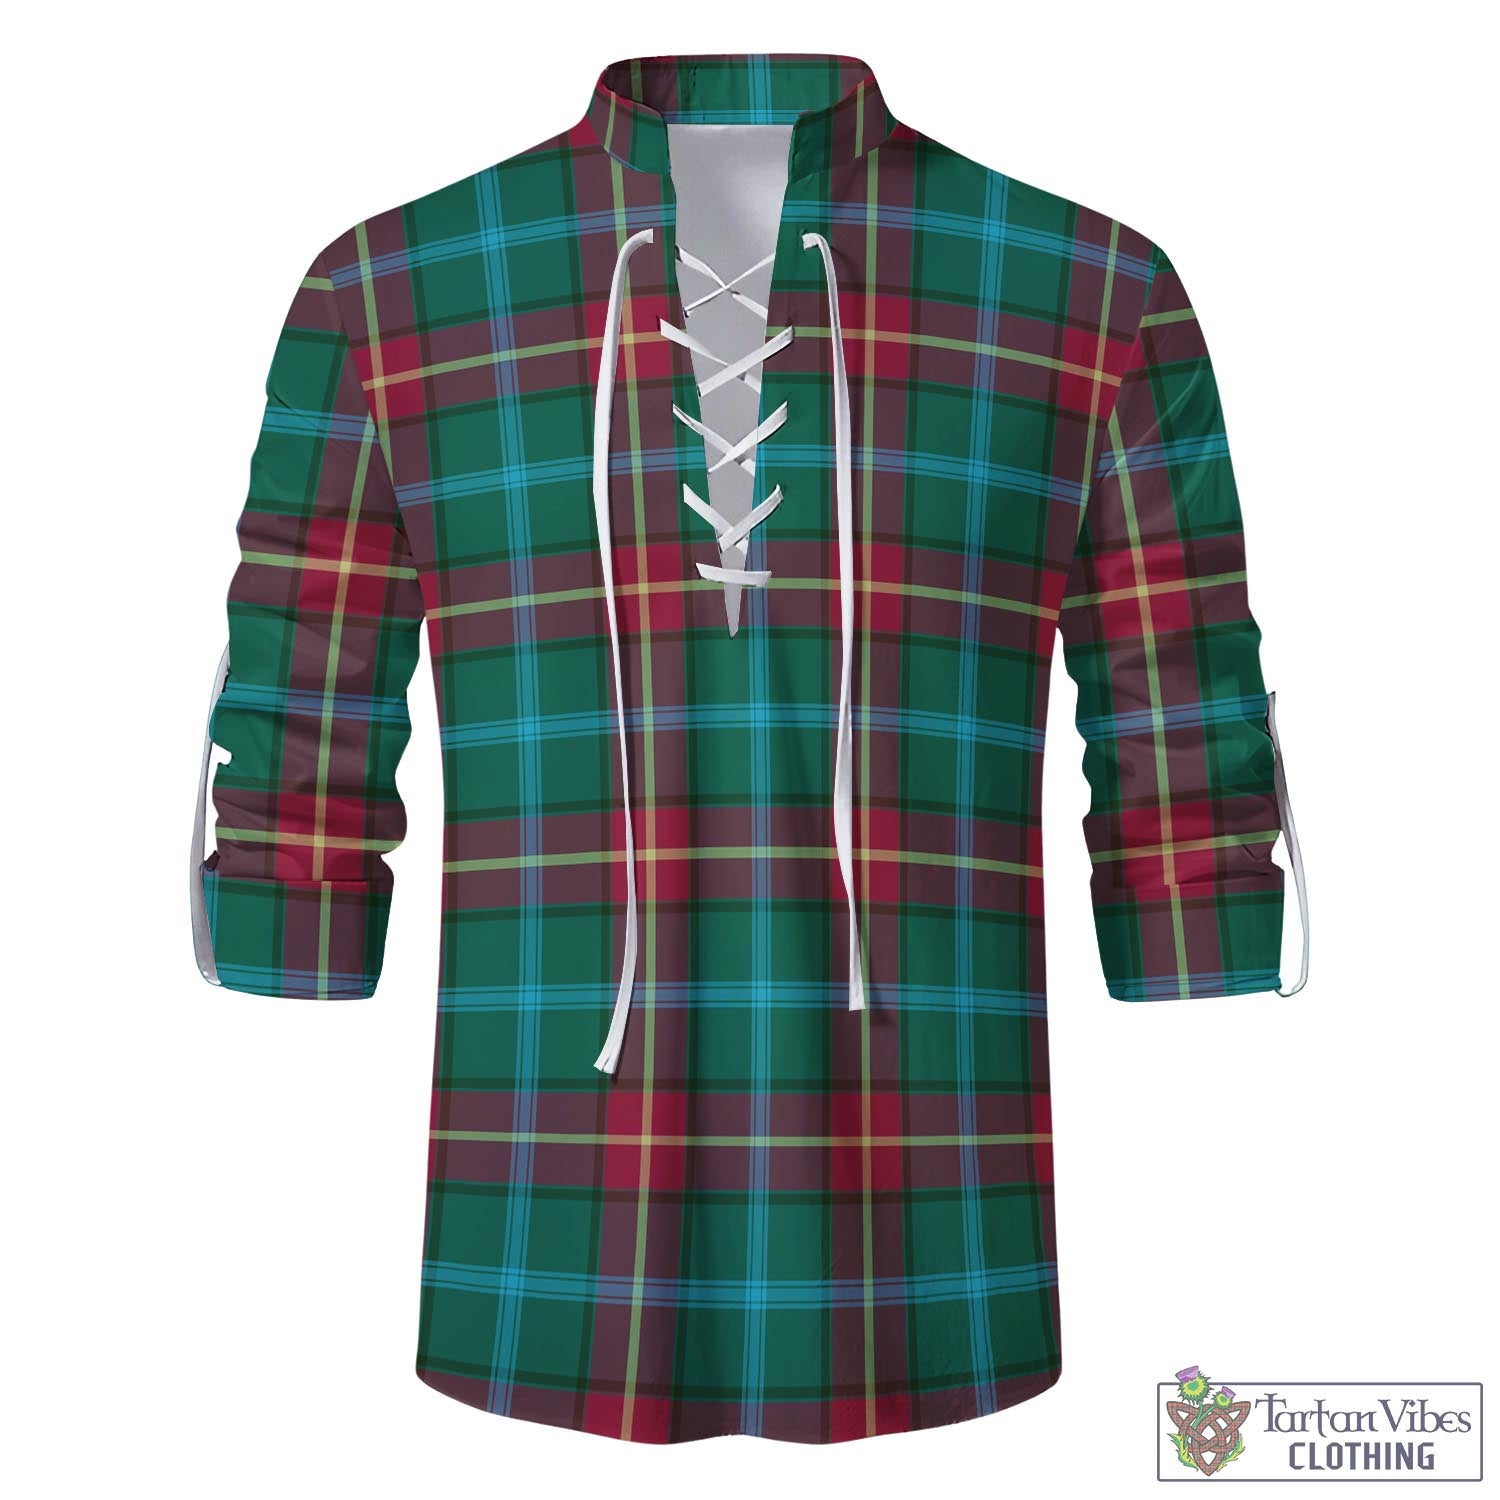 Tartan Vibes Clothing Manitoba Province Canada Tartan Men's Scottish Traditional Jacobite Ghillie Kilt Shirt